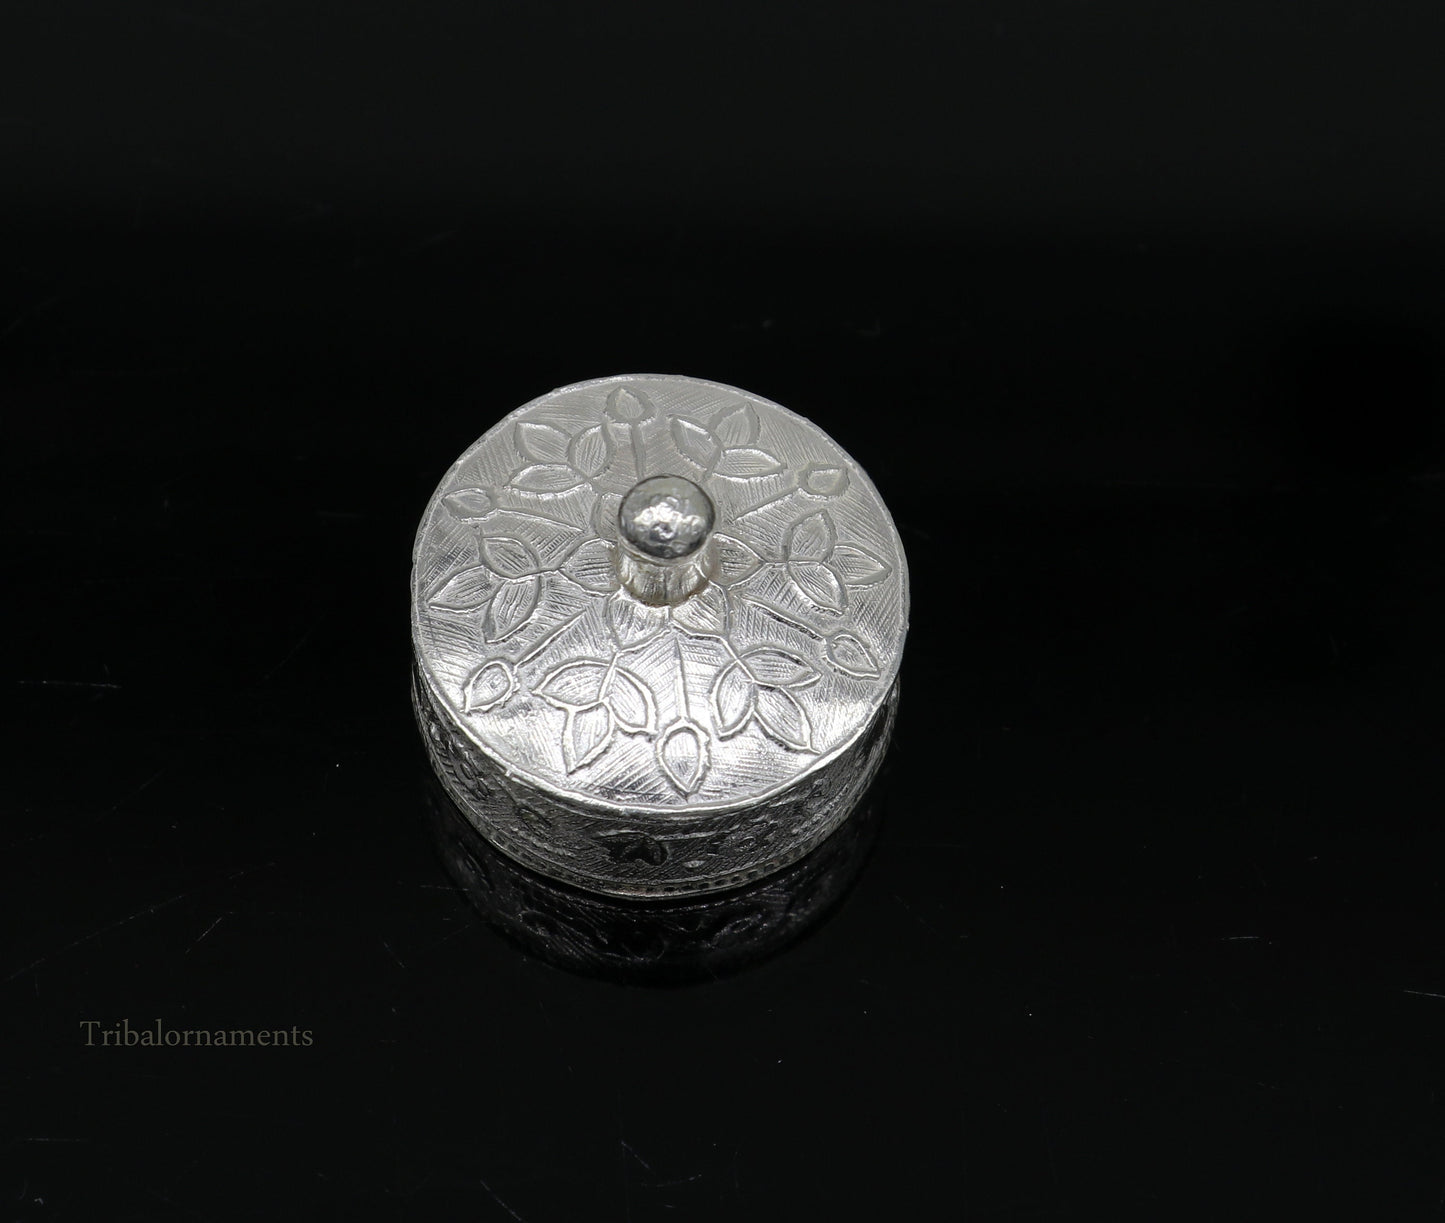 925 sterling silver trinket box, kajal box/casket box bridal round shape Sindur box collection, container box, eyeliner box gifting stb184 - TRIBAL ORNAMENTS